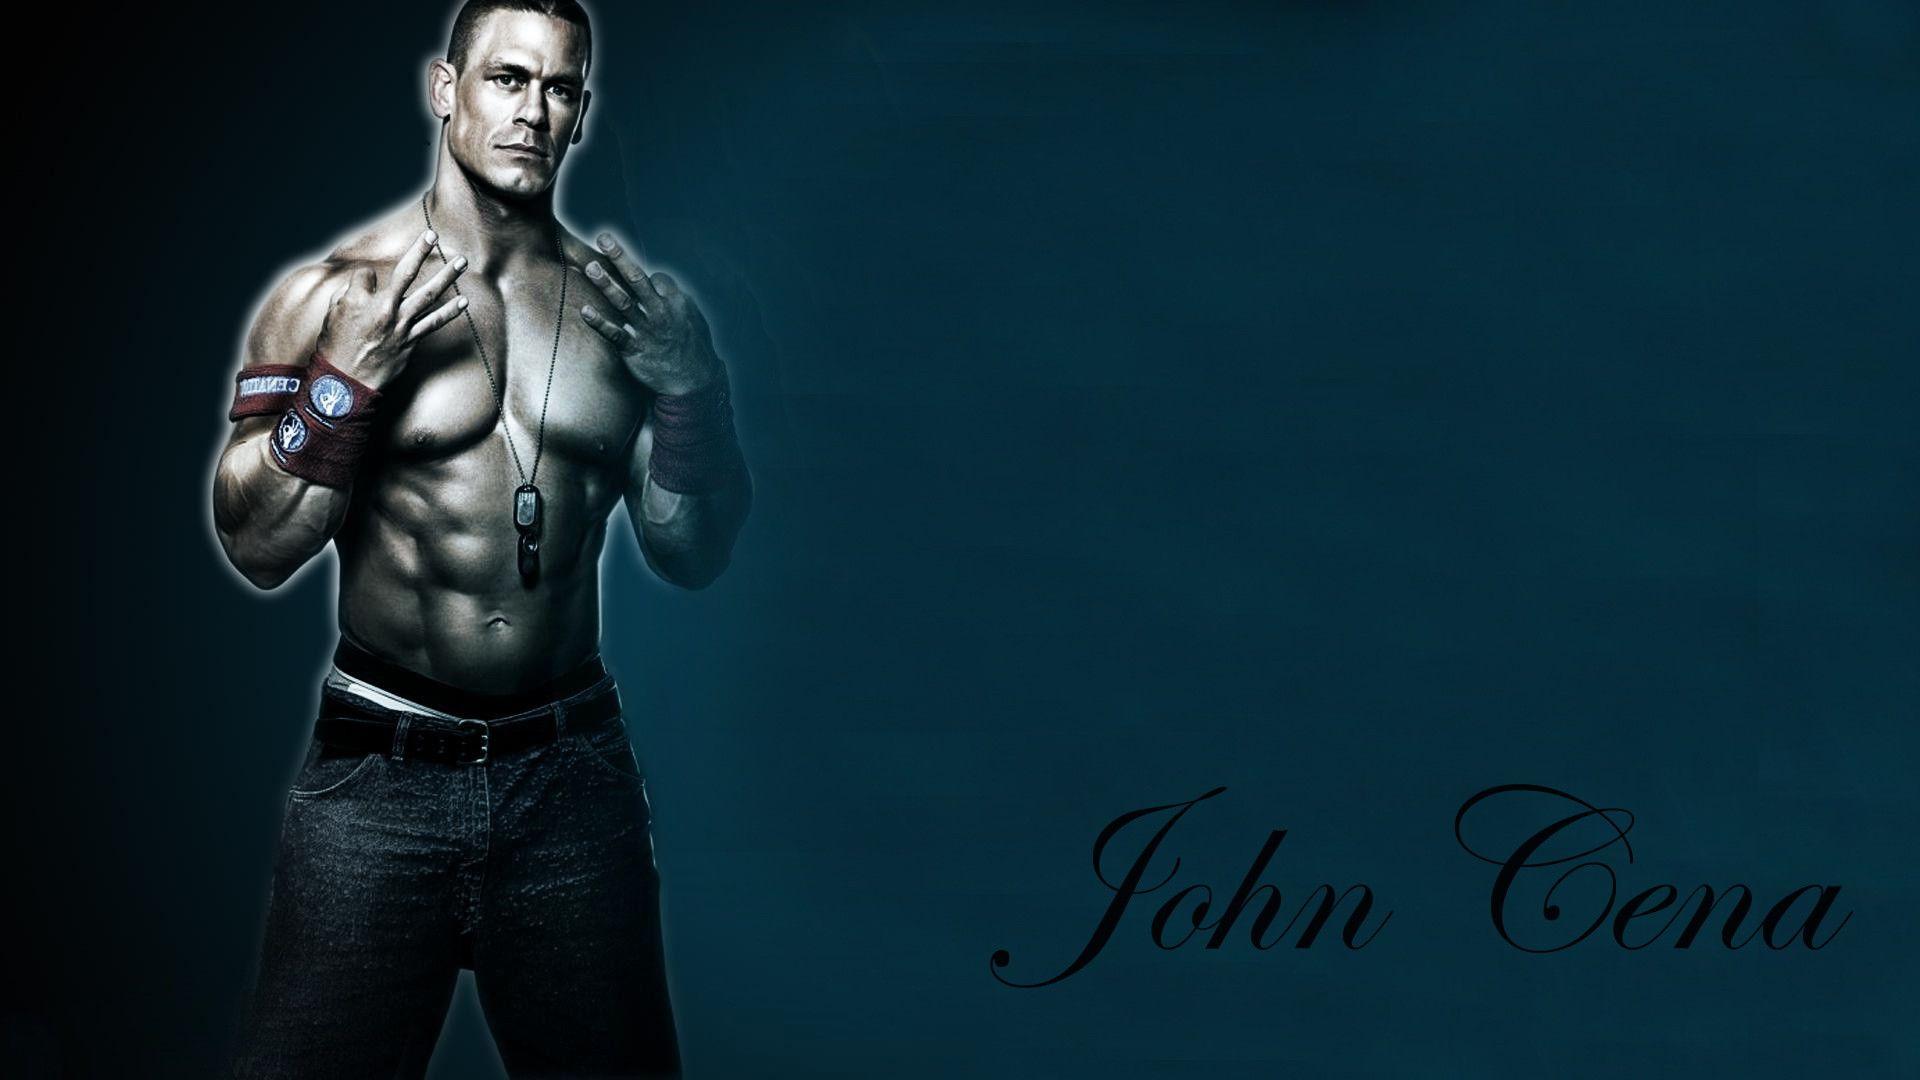 WWE John Cena Wallpaper HD Wallpaper 532×504 Pics Of John Cena